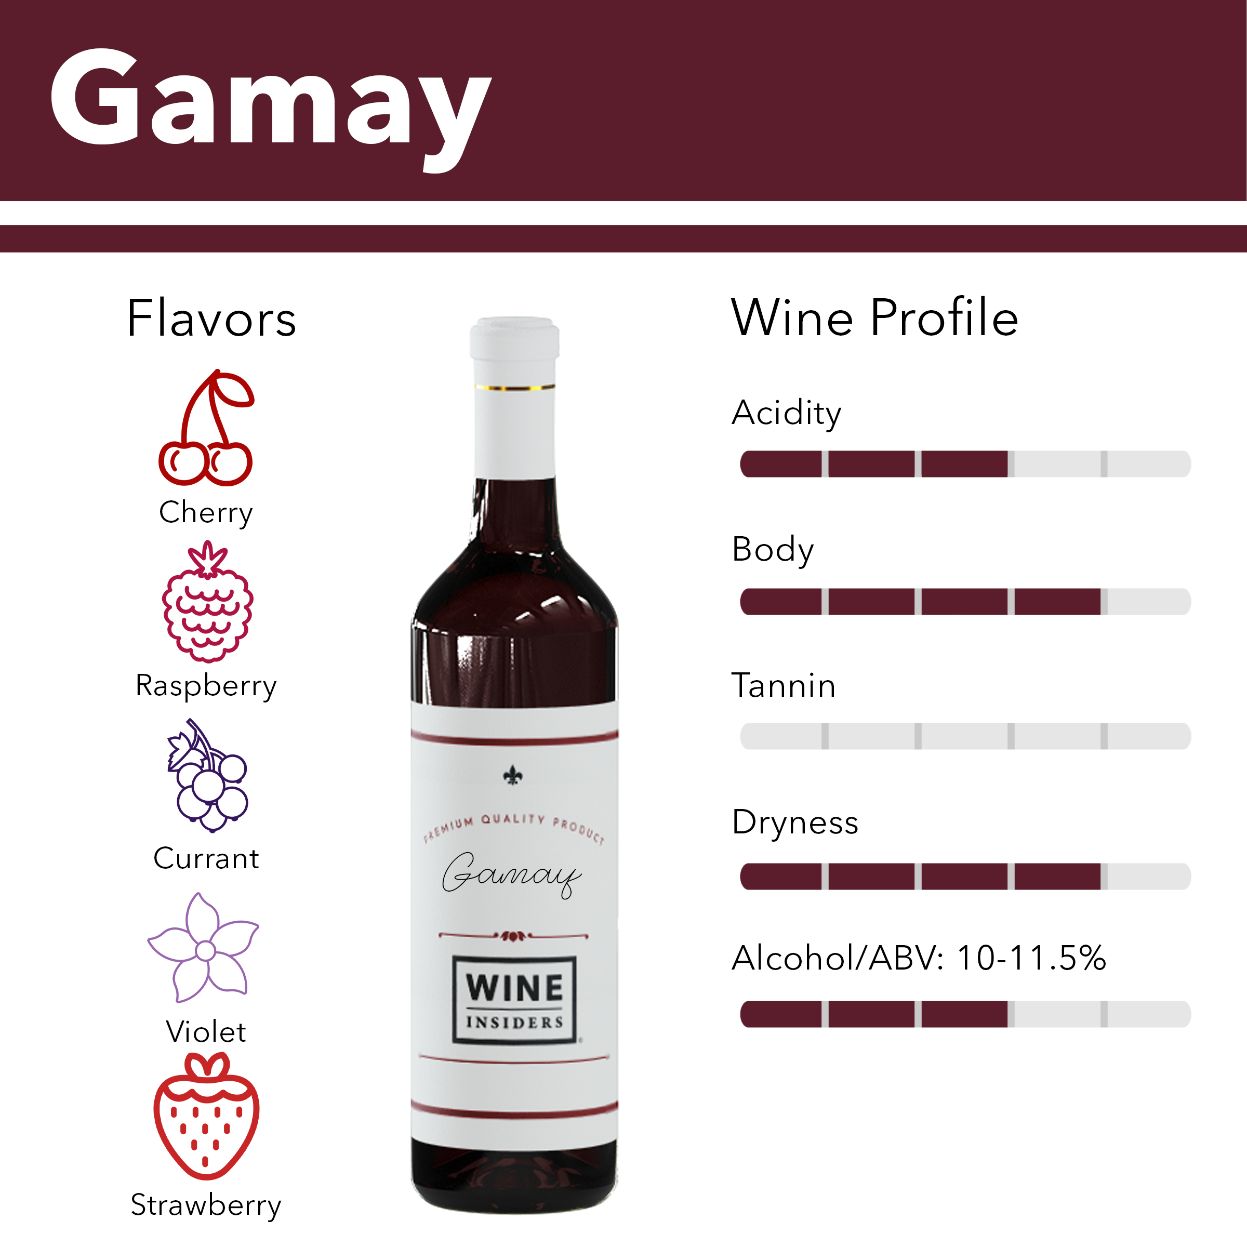 Gamay wine flavor profile.